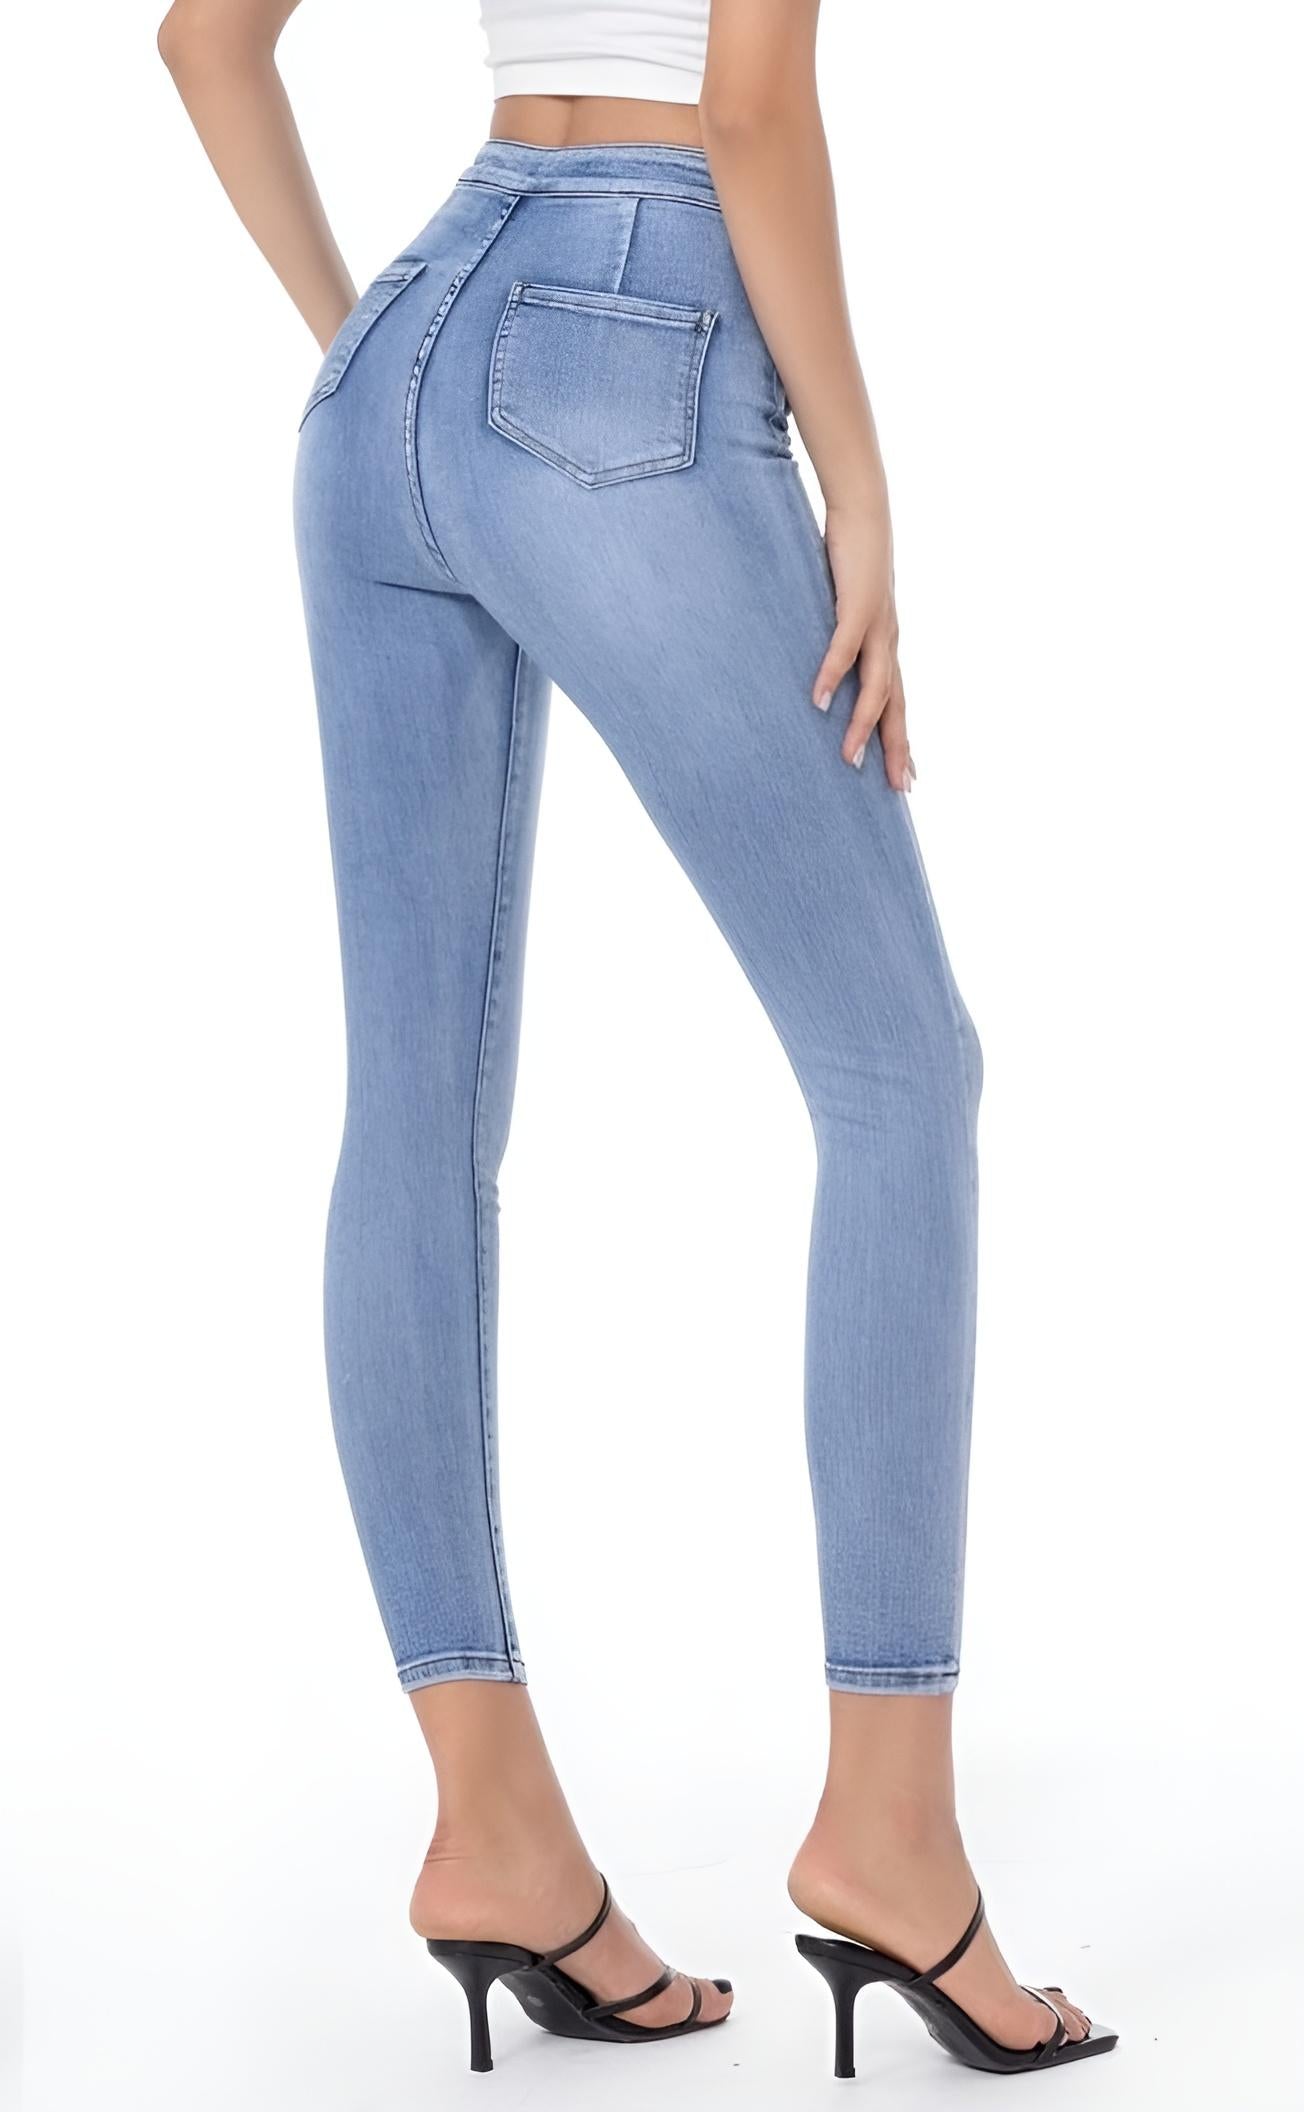 Pantalone Donna Jeans Bottone Vita Alta Slim Skinny Aderente Casual Easy - LE STYLE DE PARIS